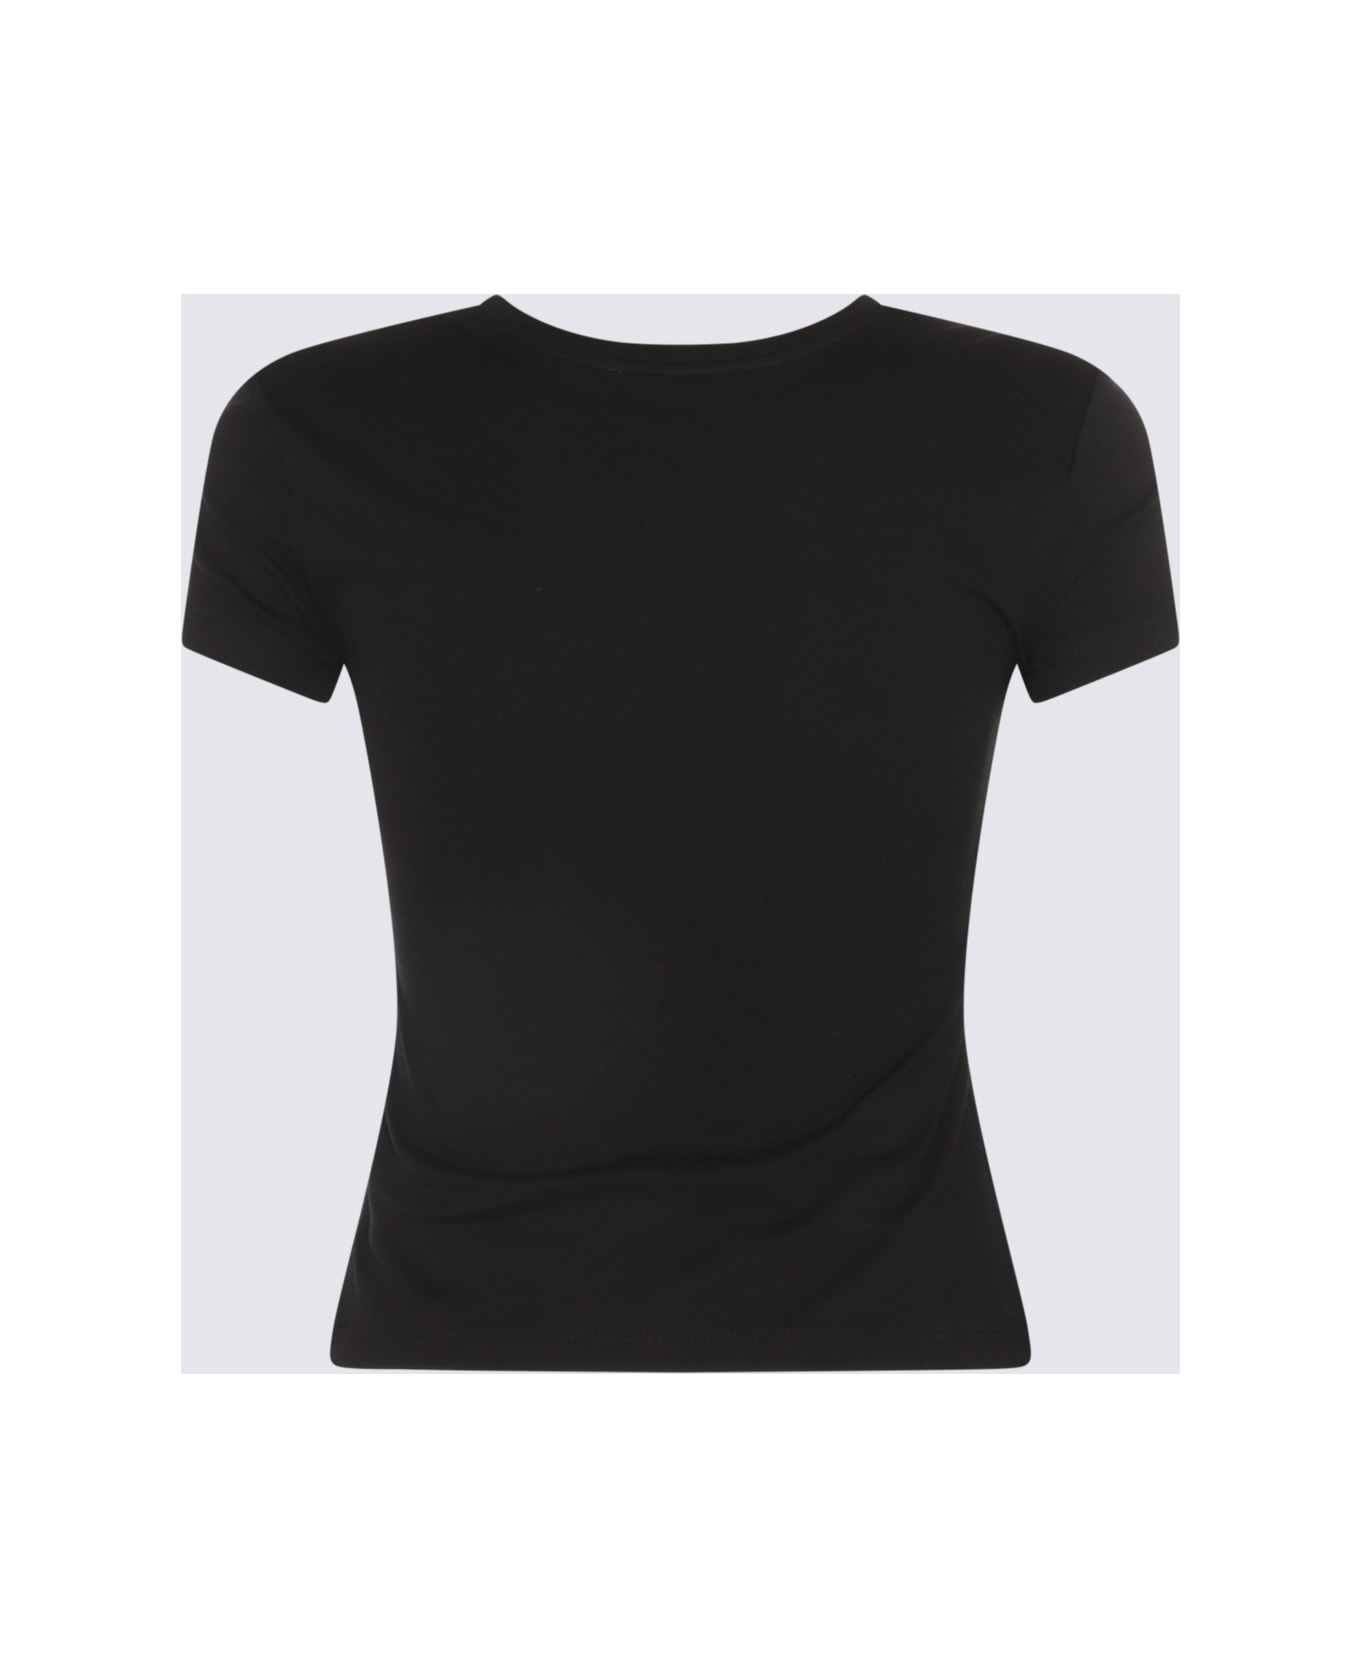 Blumarine Black Cotton T-shirt - Black Tシャツ